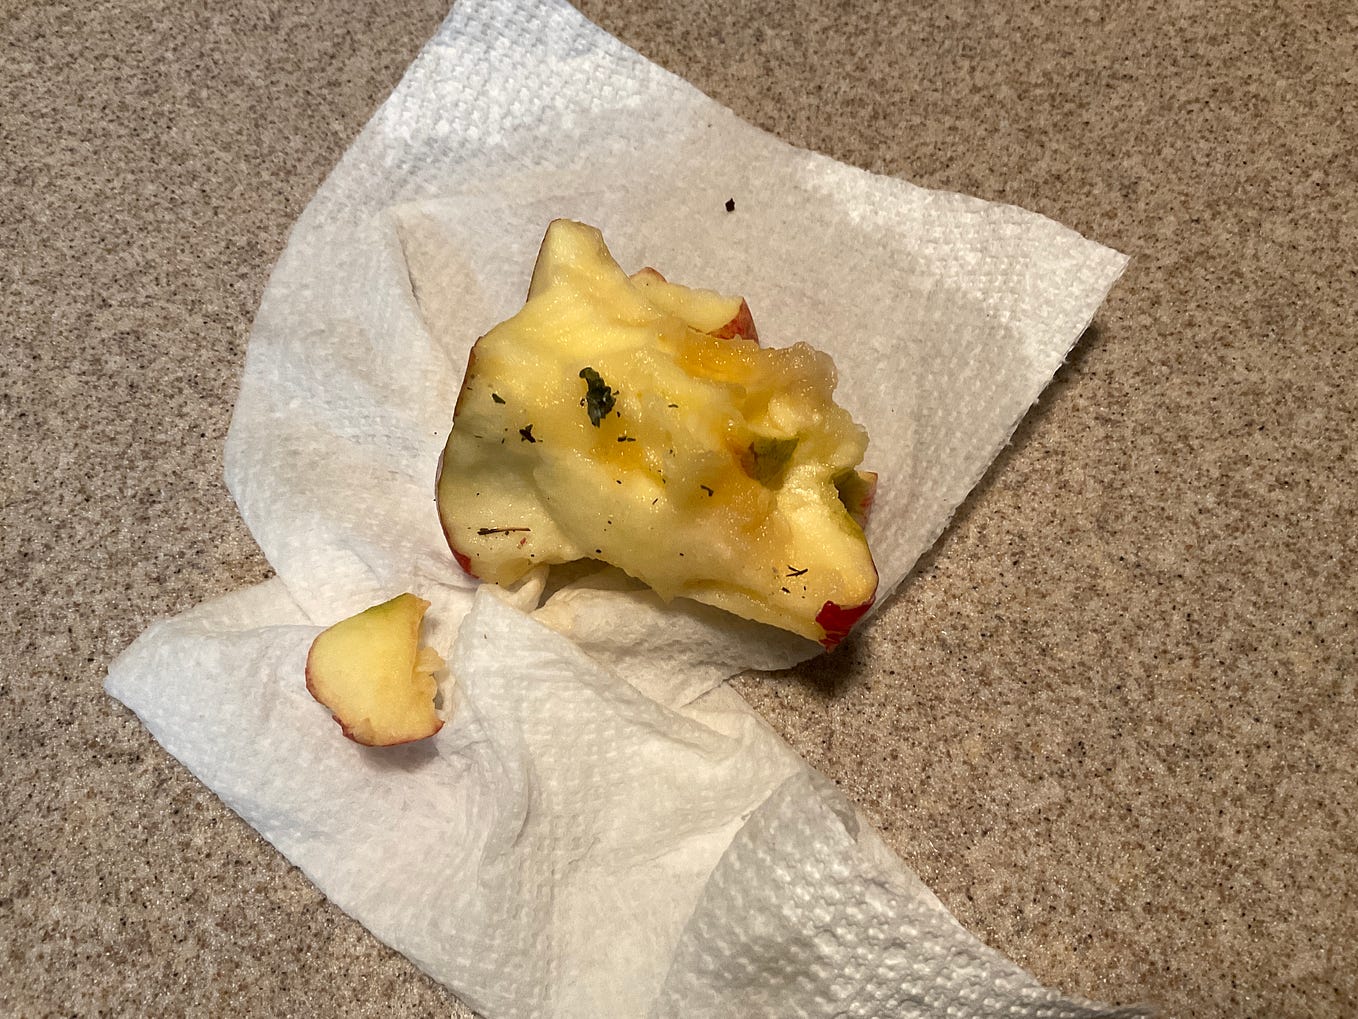 A rotting apple core